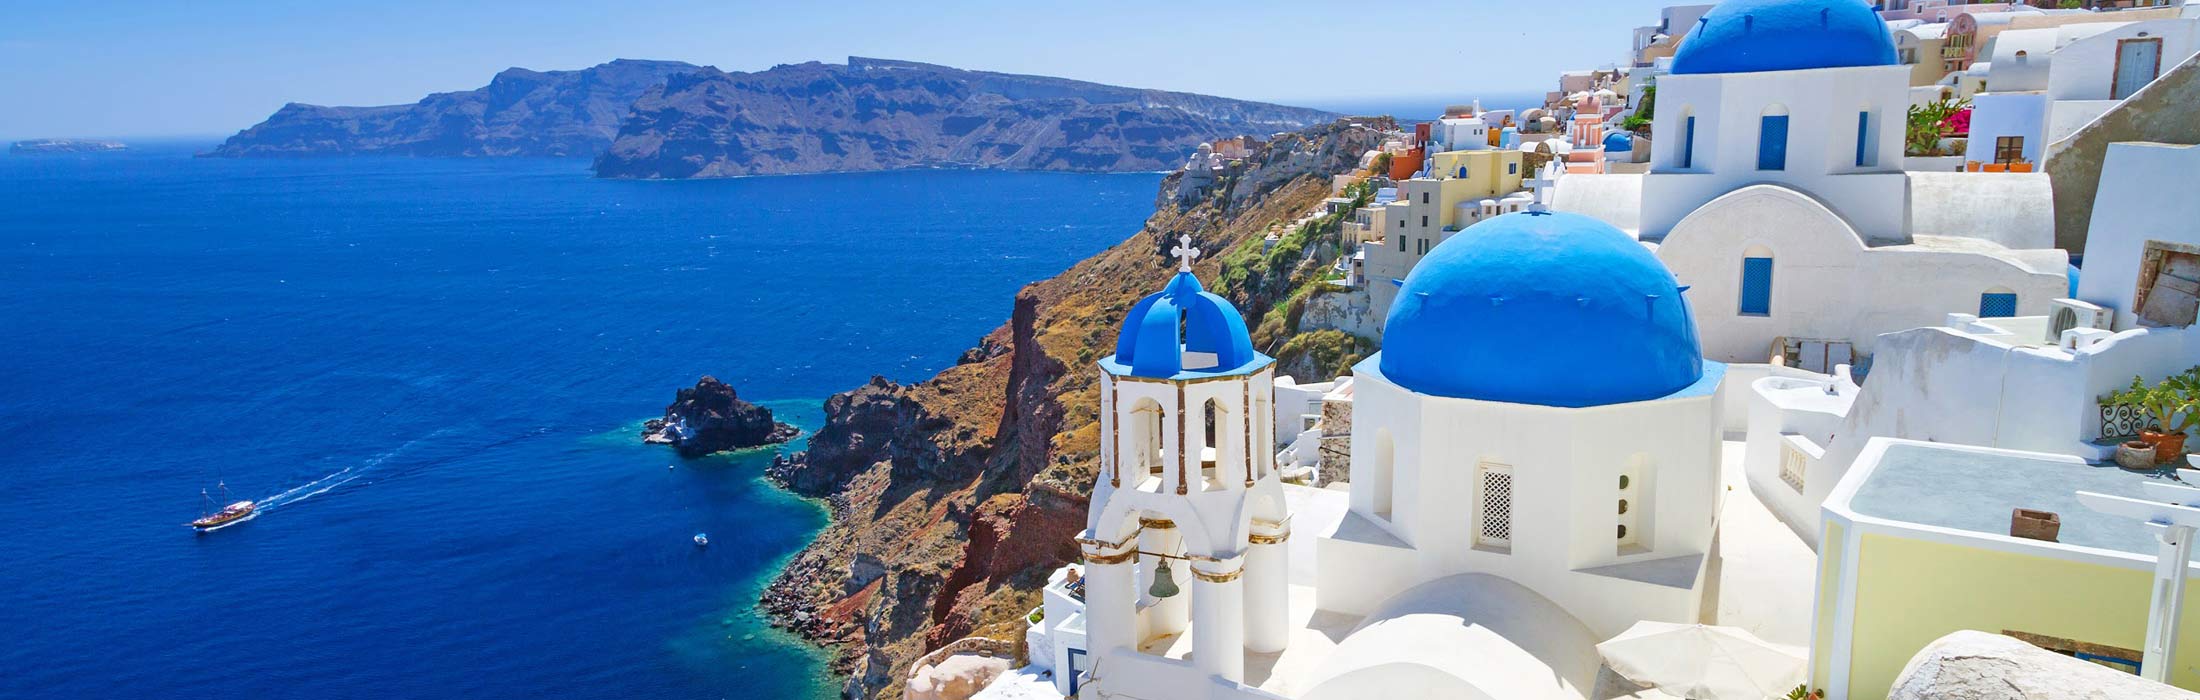 top yacht charter destinations mediterranean greece santorini main slider 2